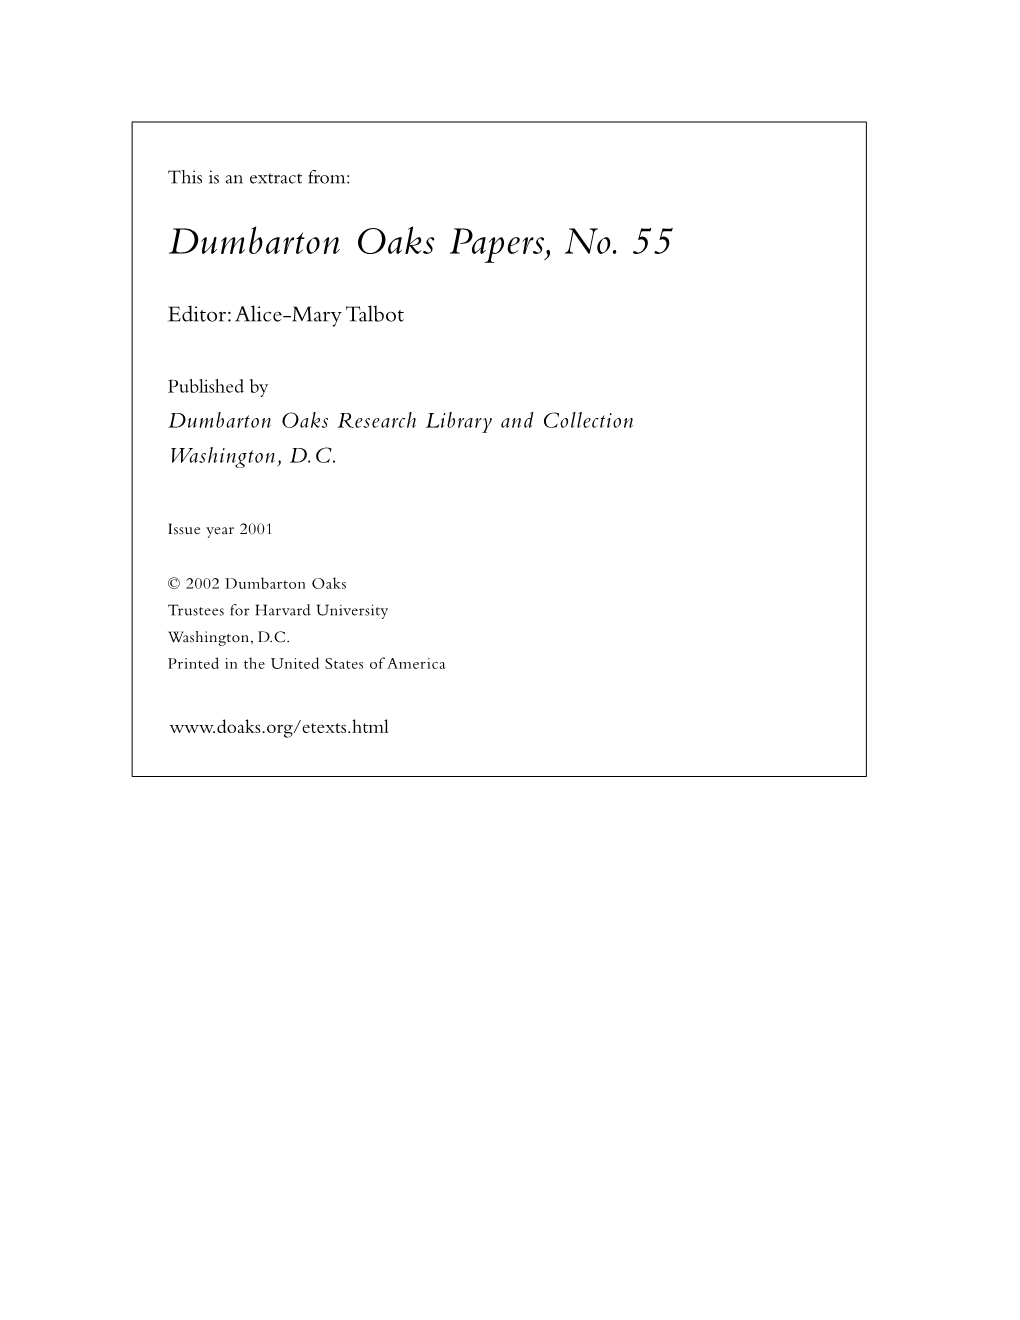 Dumbarton Oaks Papers, No. 55